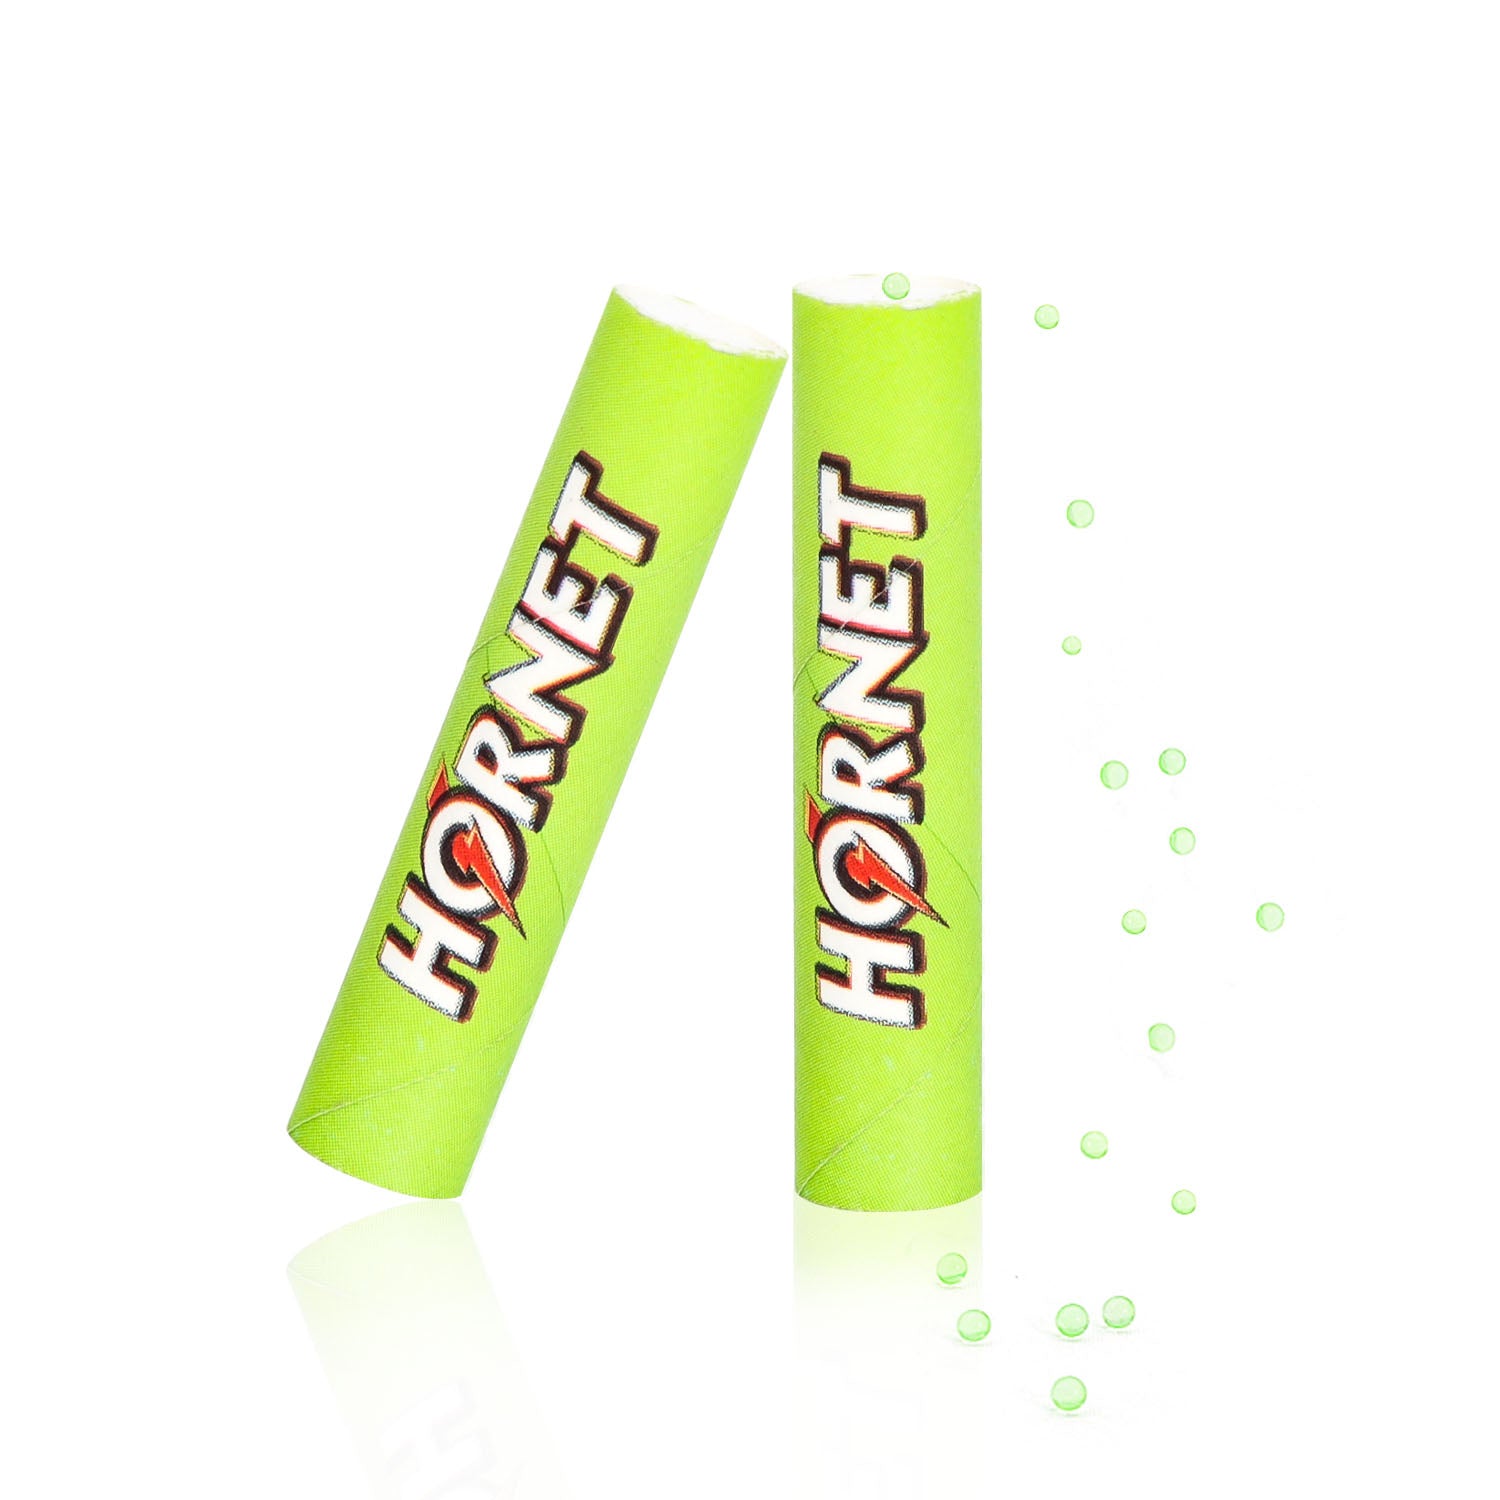 HORNET Green Lemon Flavor Filter Tips with Flavored Pop, 7 mm Filter Tips, 10 Tips / Pack 24 Packs / Box